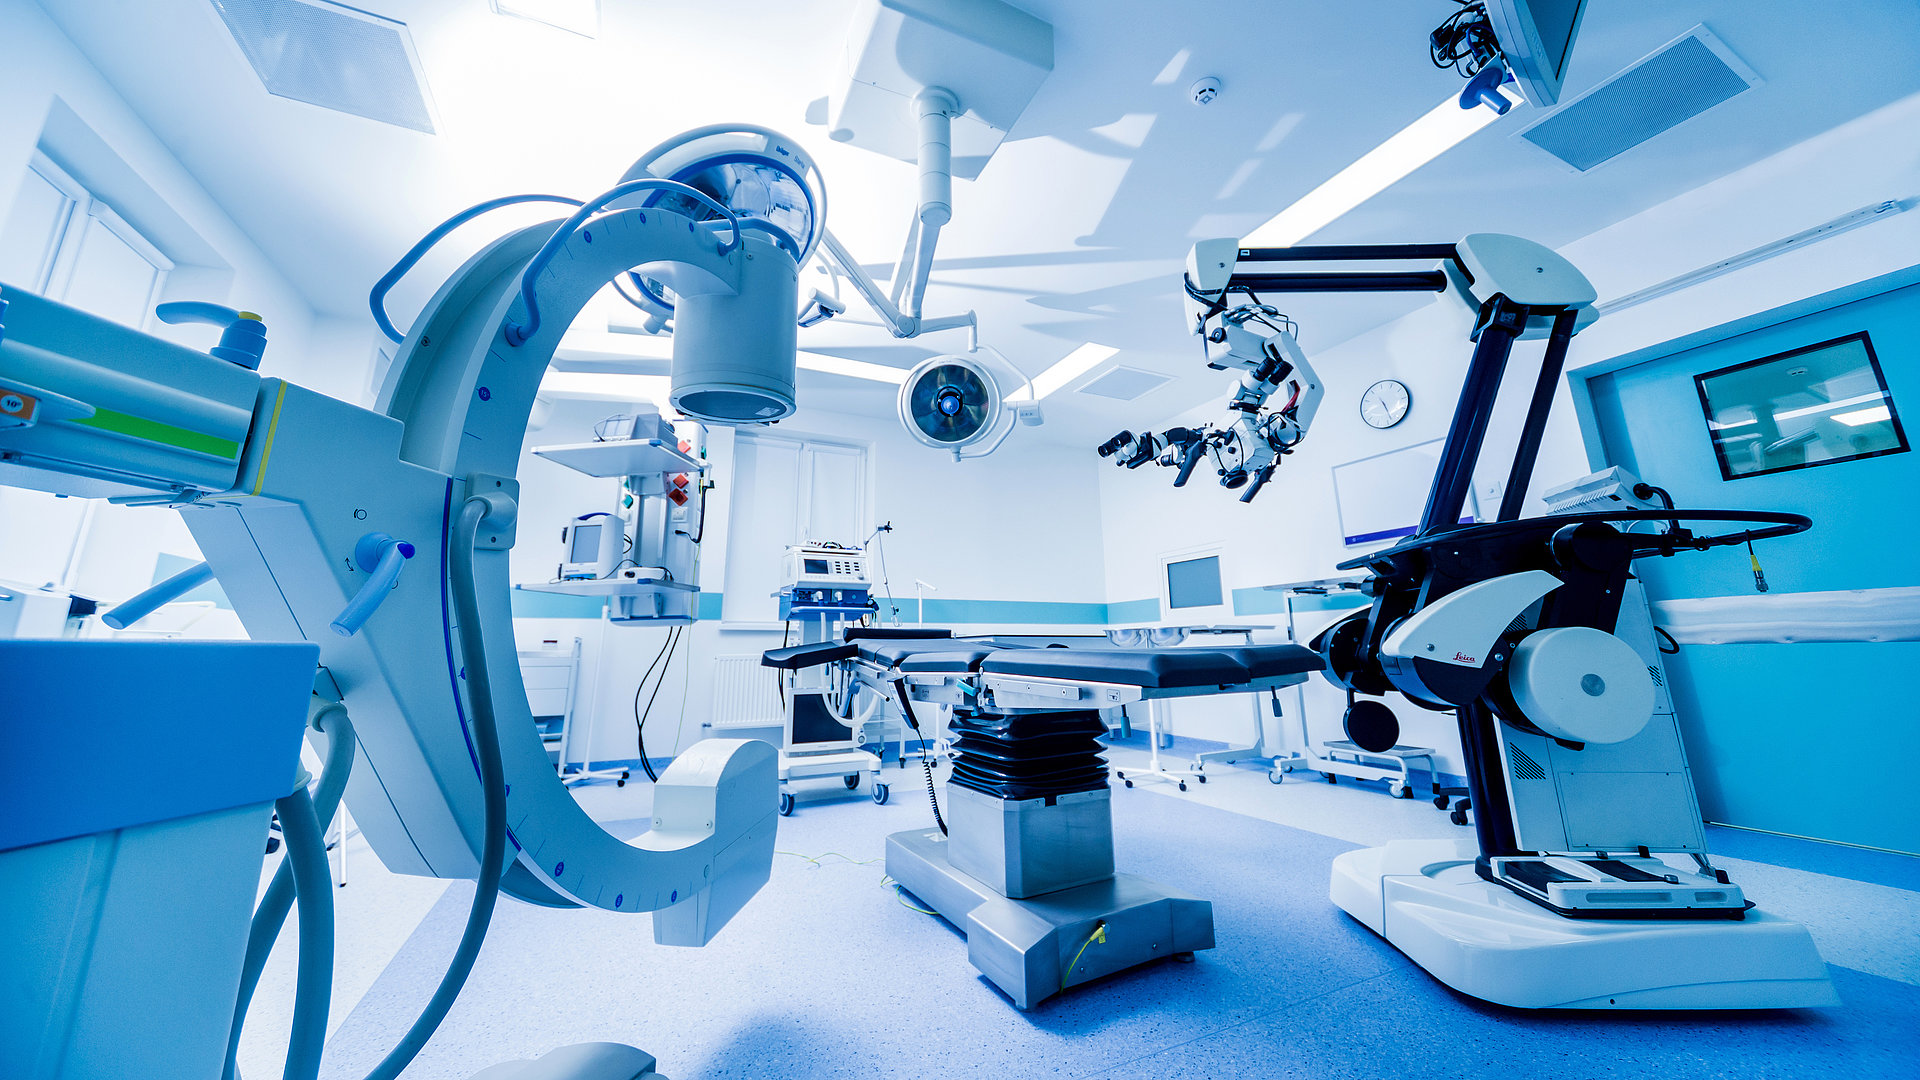 csm_CeramTec-Medical-Equipment-surgery-room_e851ad4126